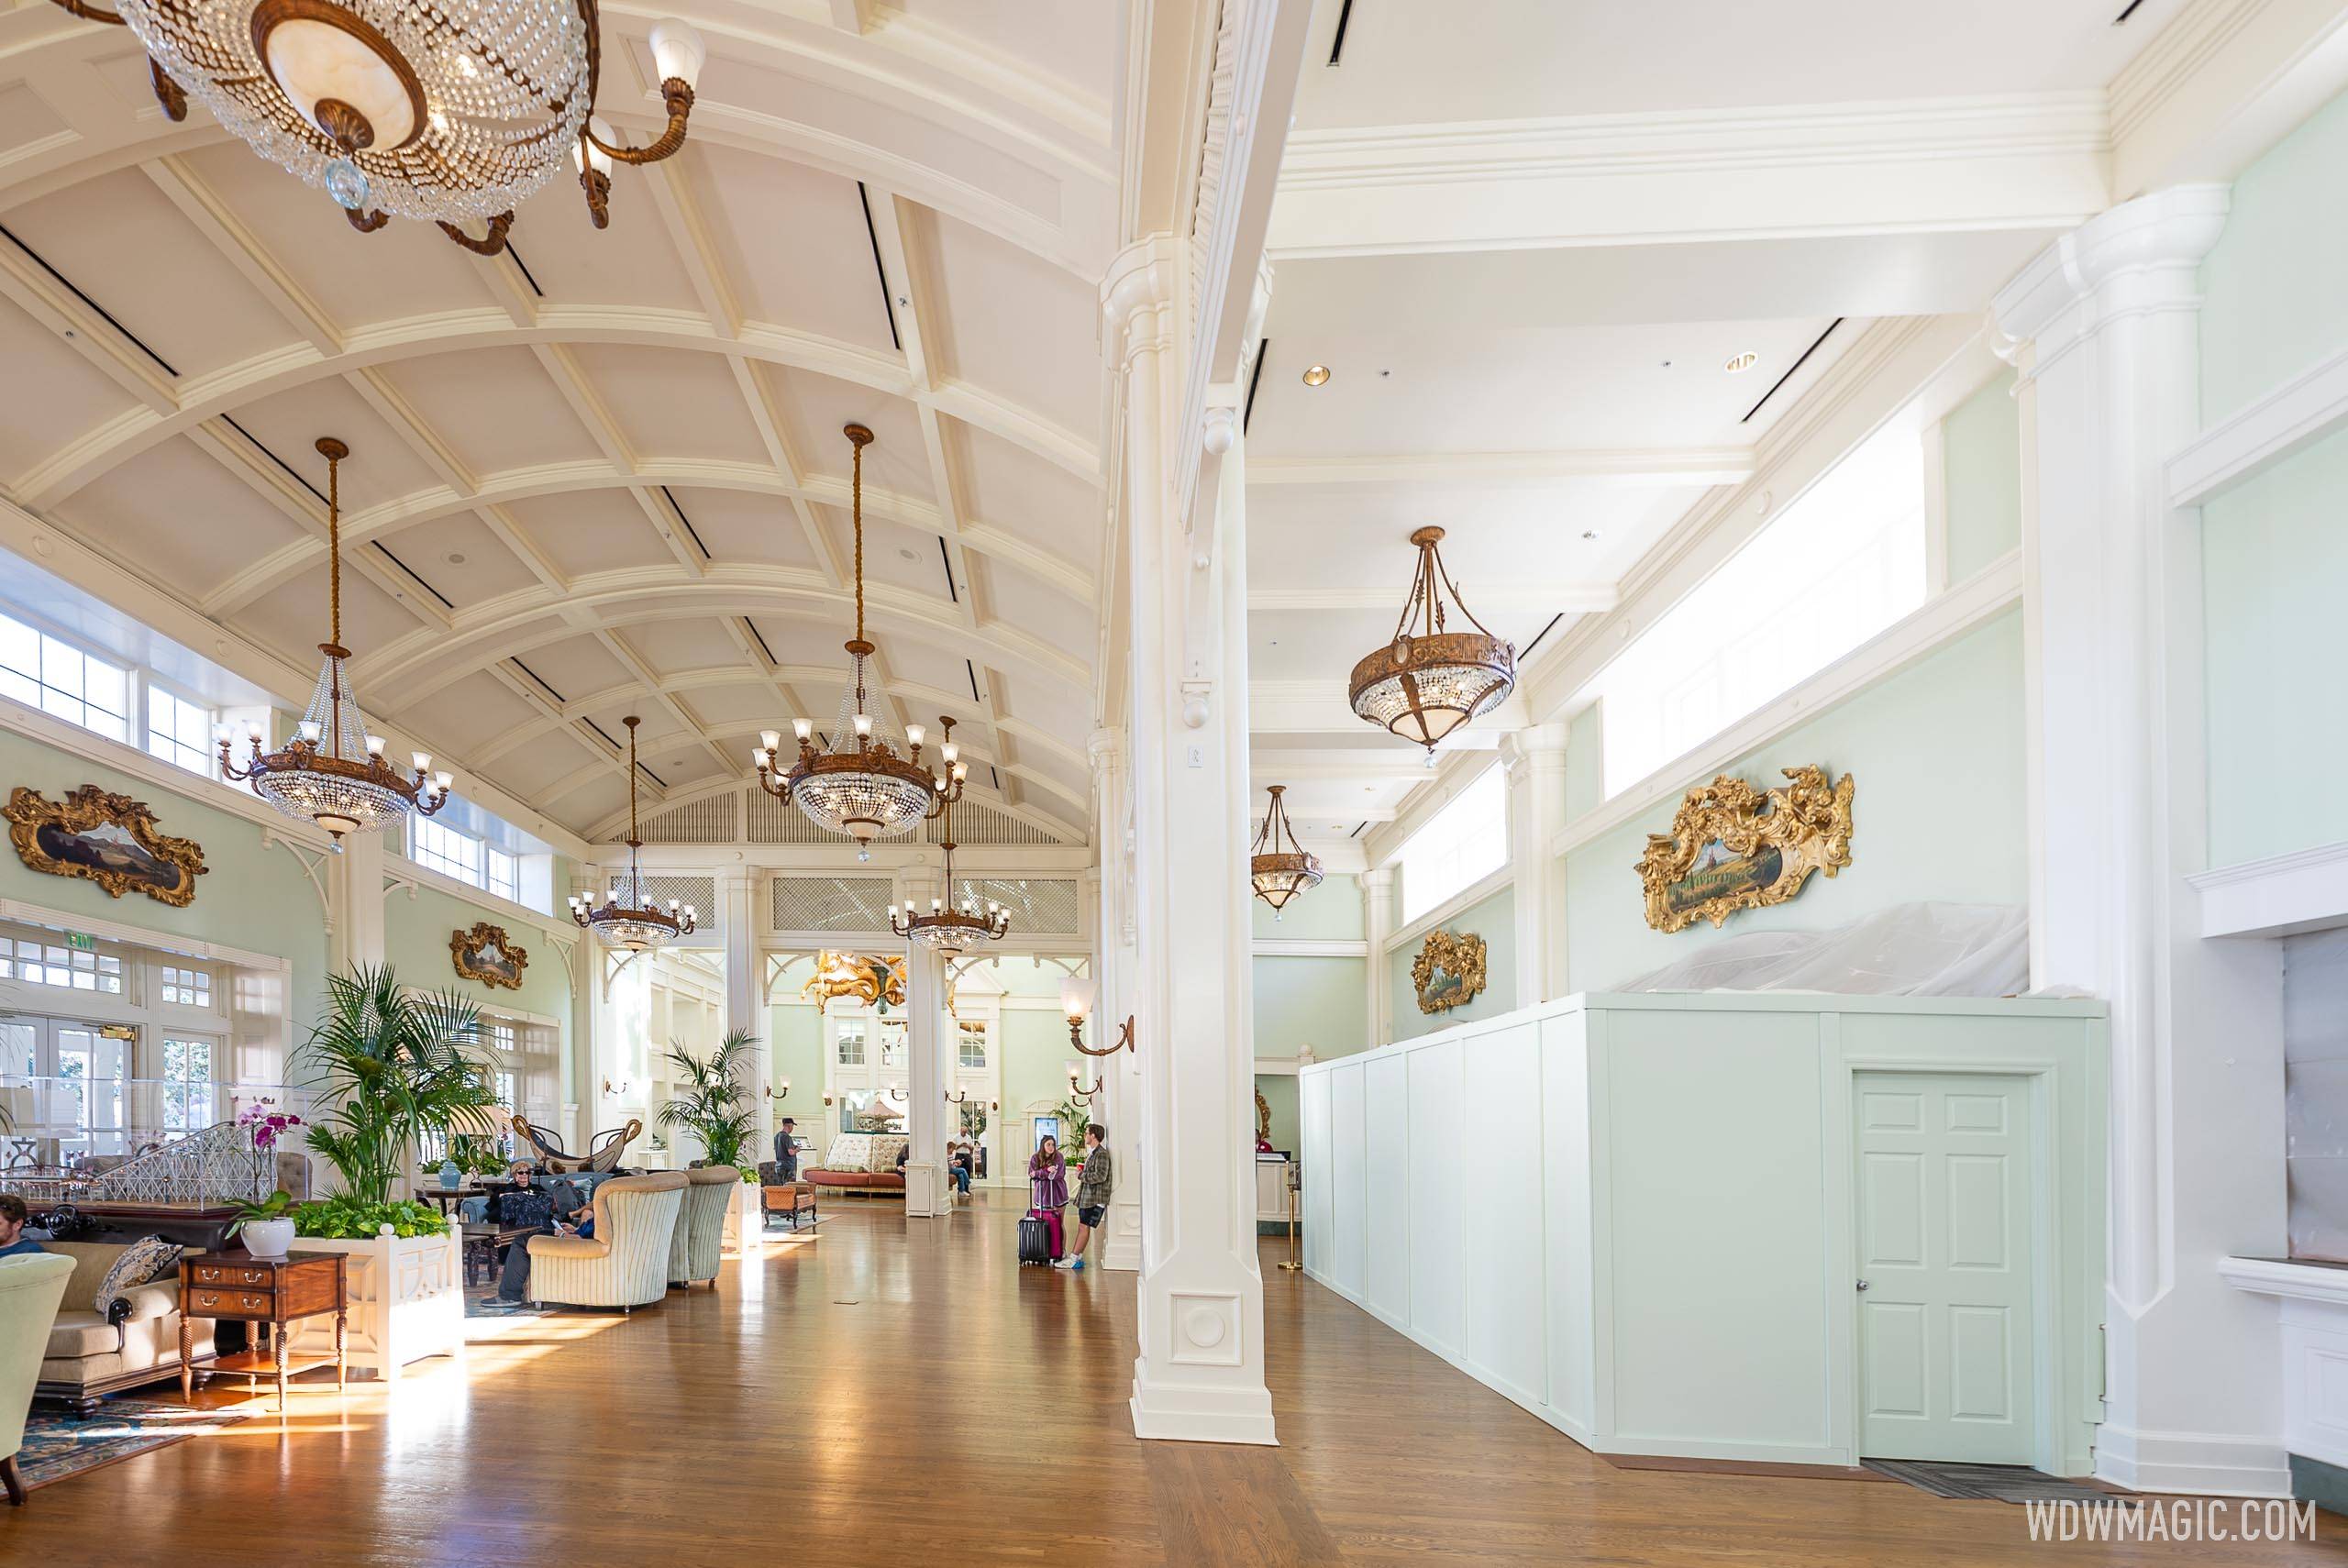 Lobby refurbishment begins at Disney's BoardWalk Inn in Walt Disney World